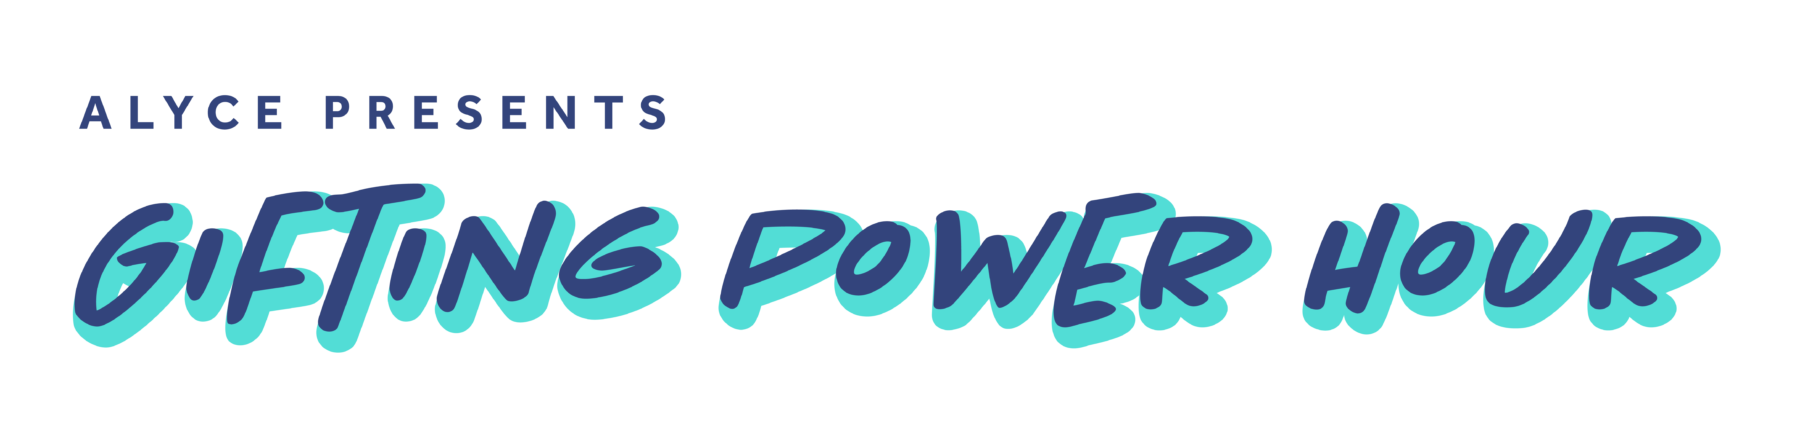 Gifting Power Hour Logo